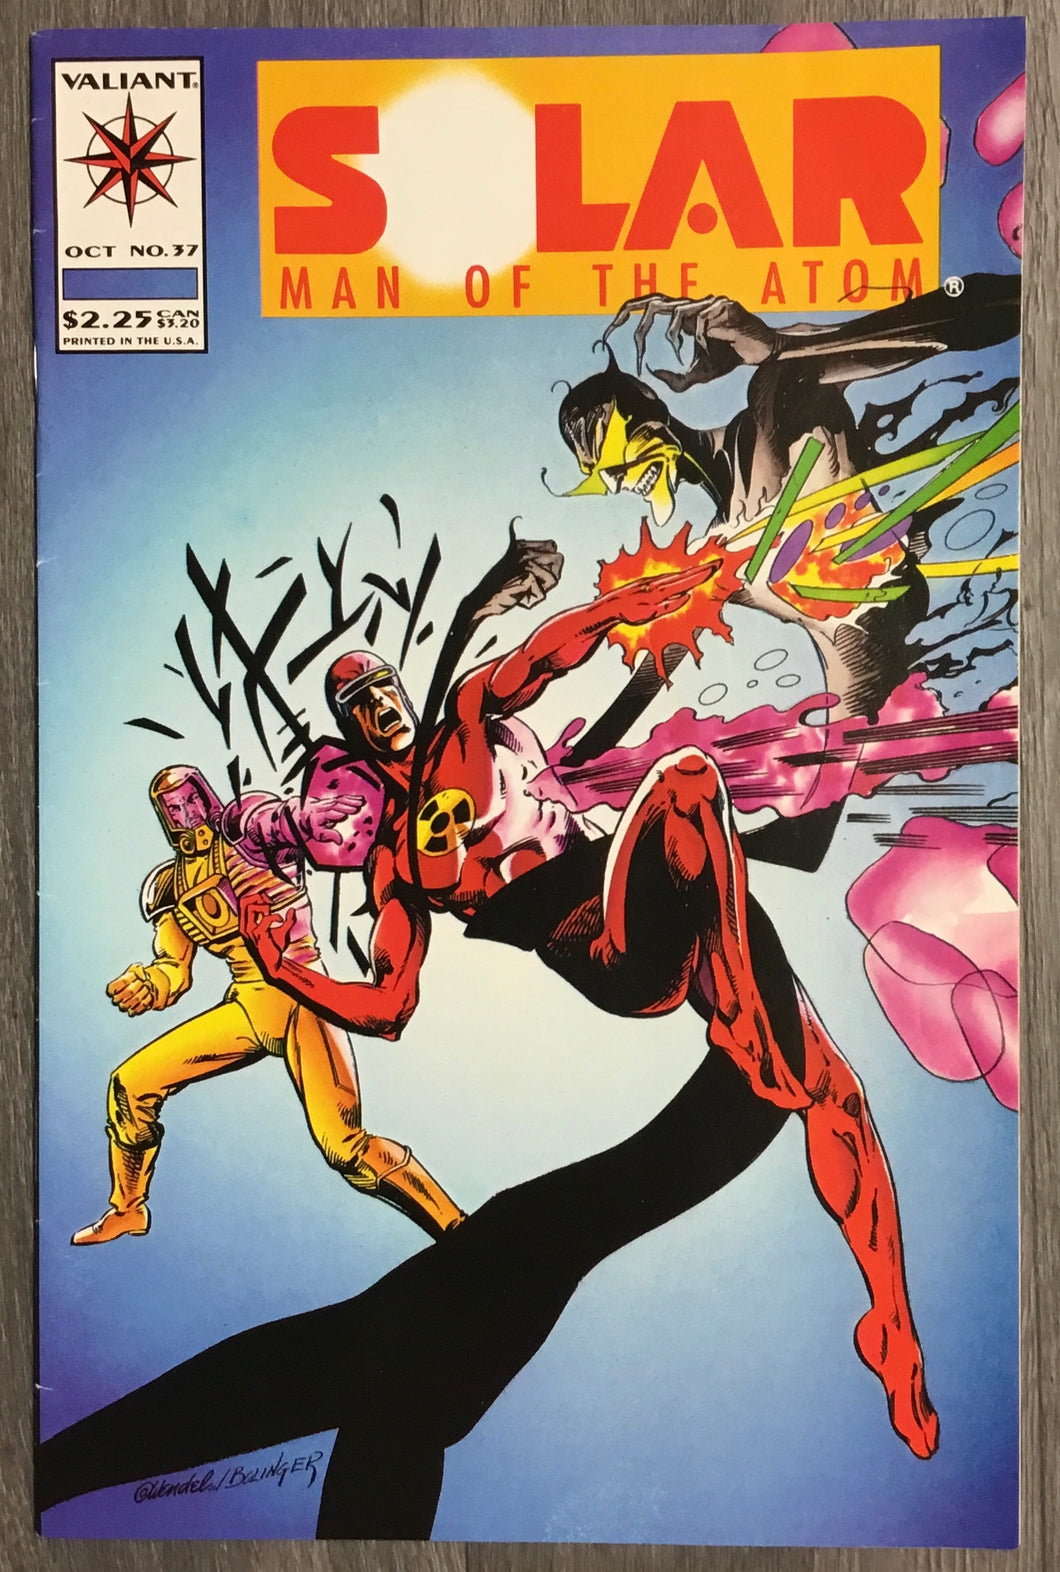 Solar Man of the Atom No. #37 1994 Valiant Comics